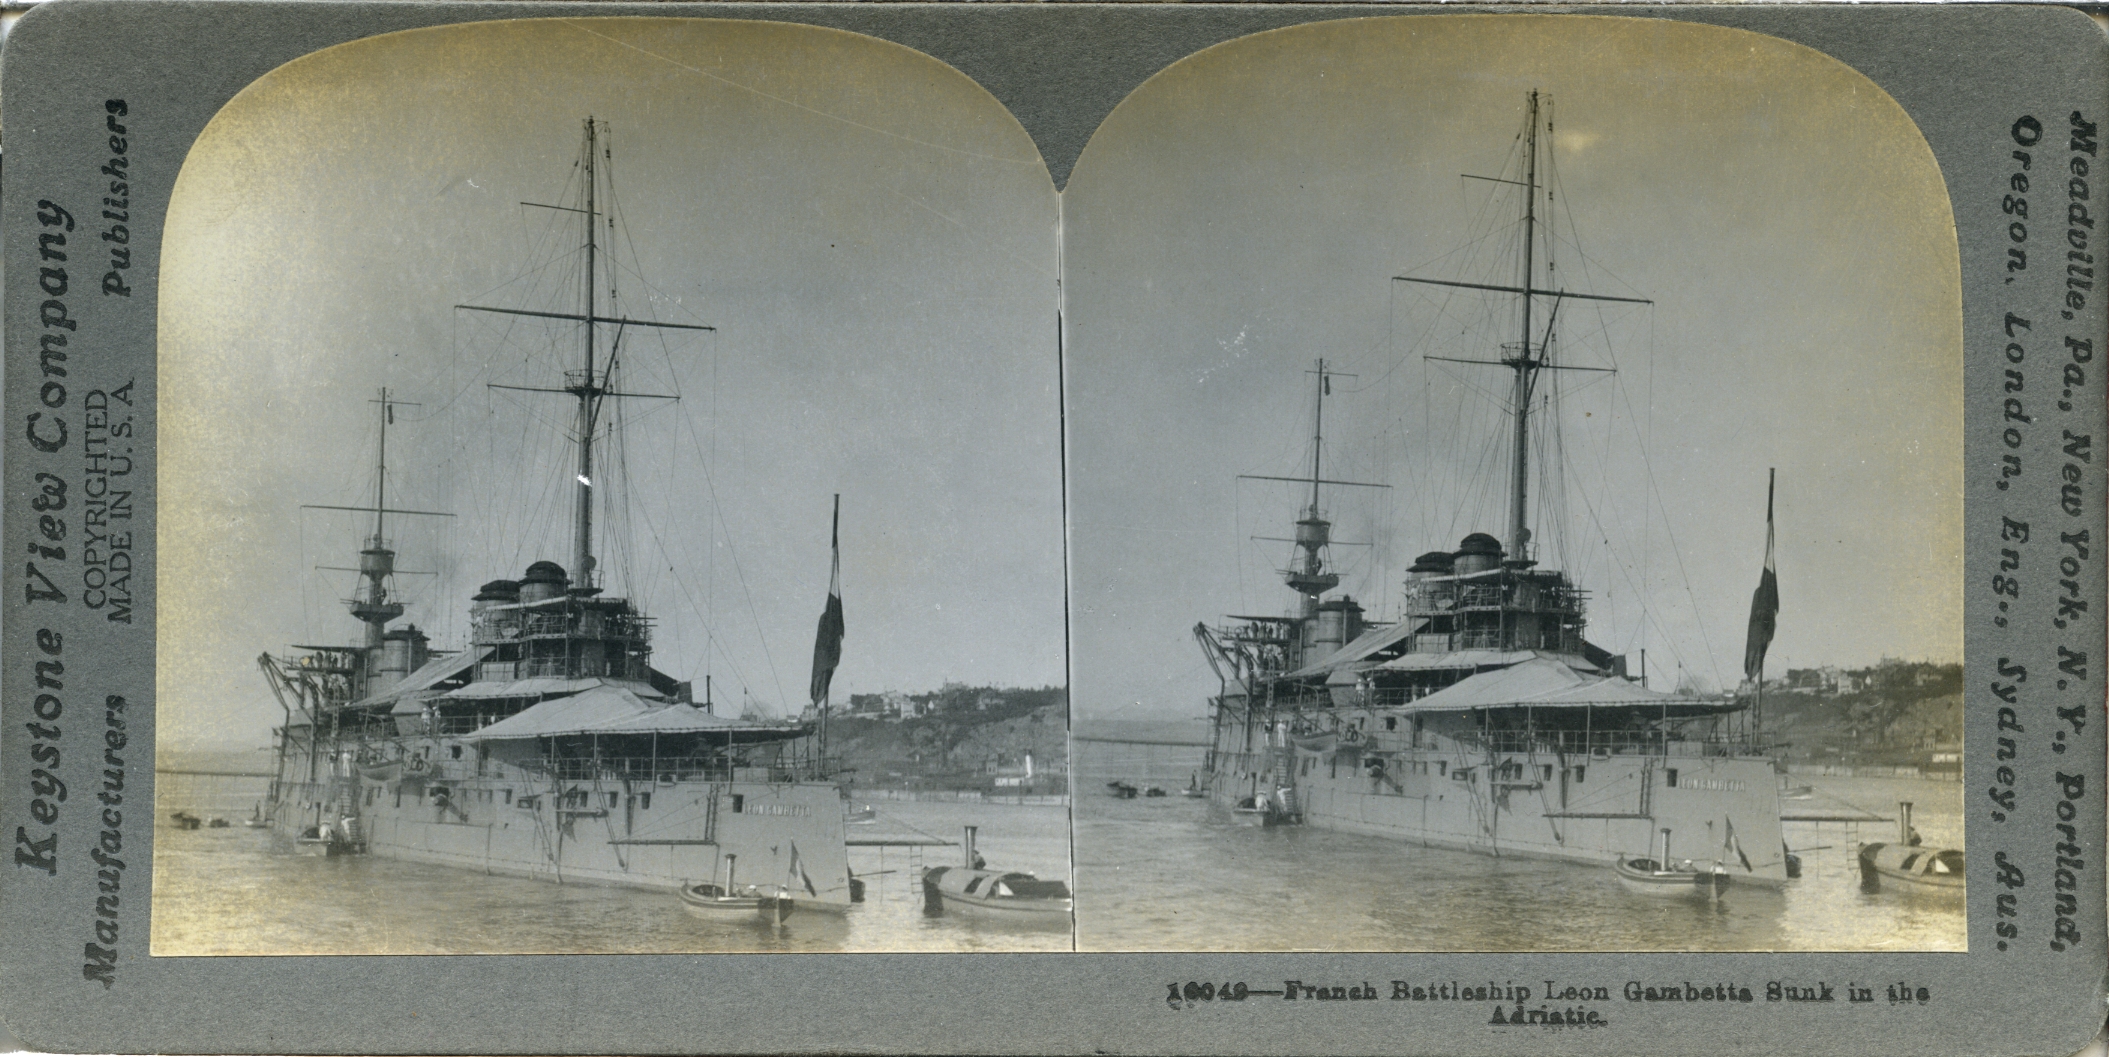 French Battleship Leon Gambetta Sunk in the Adriatic